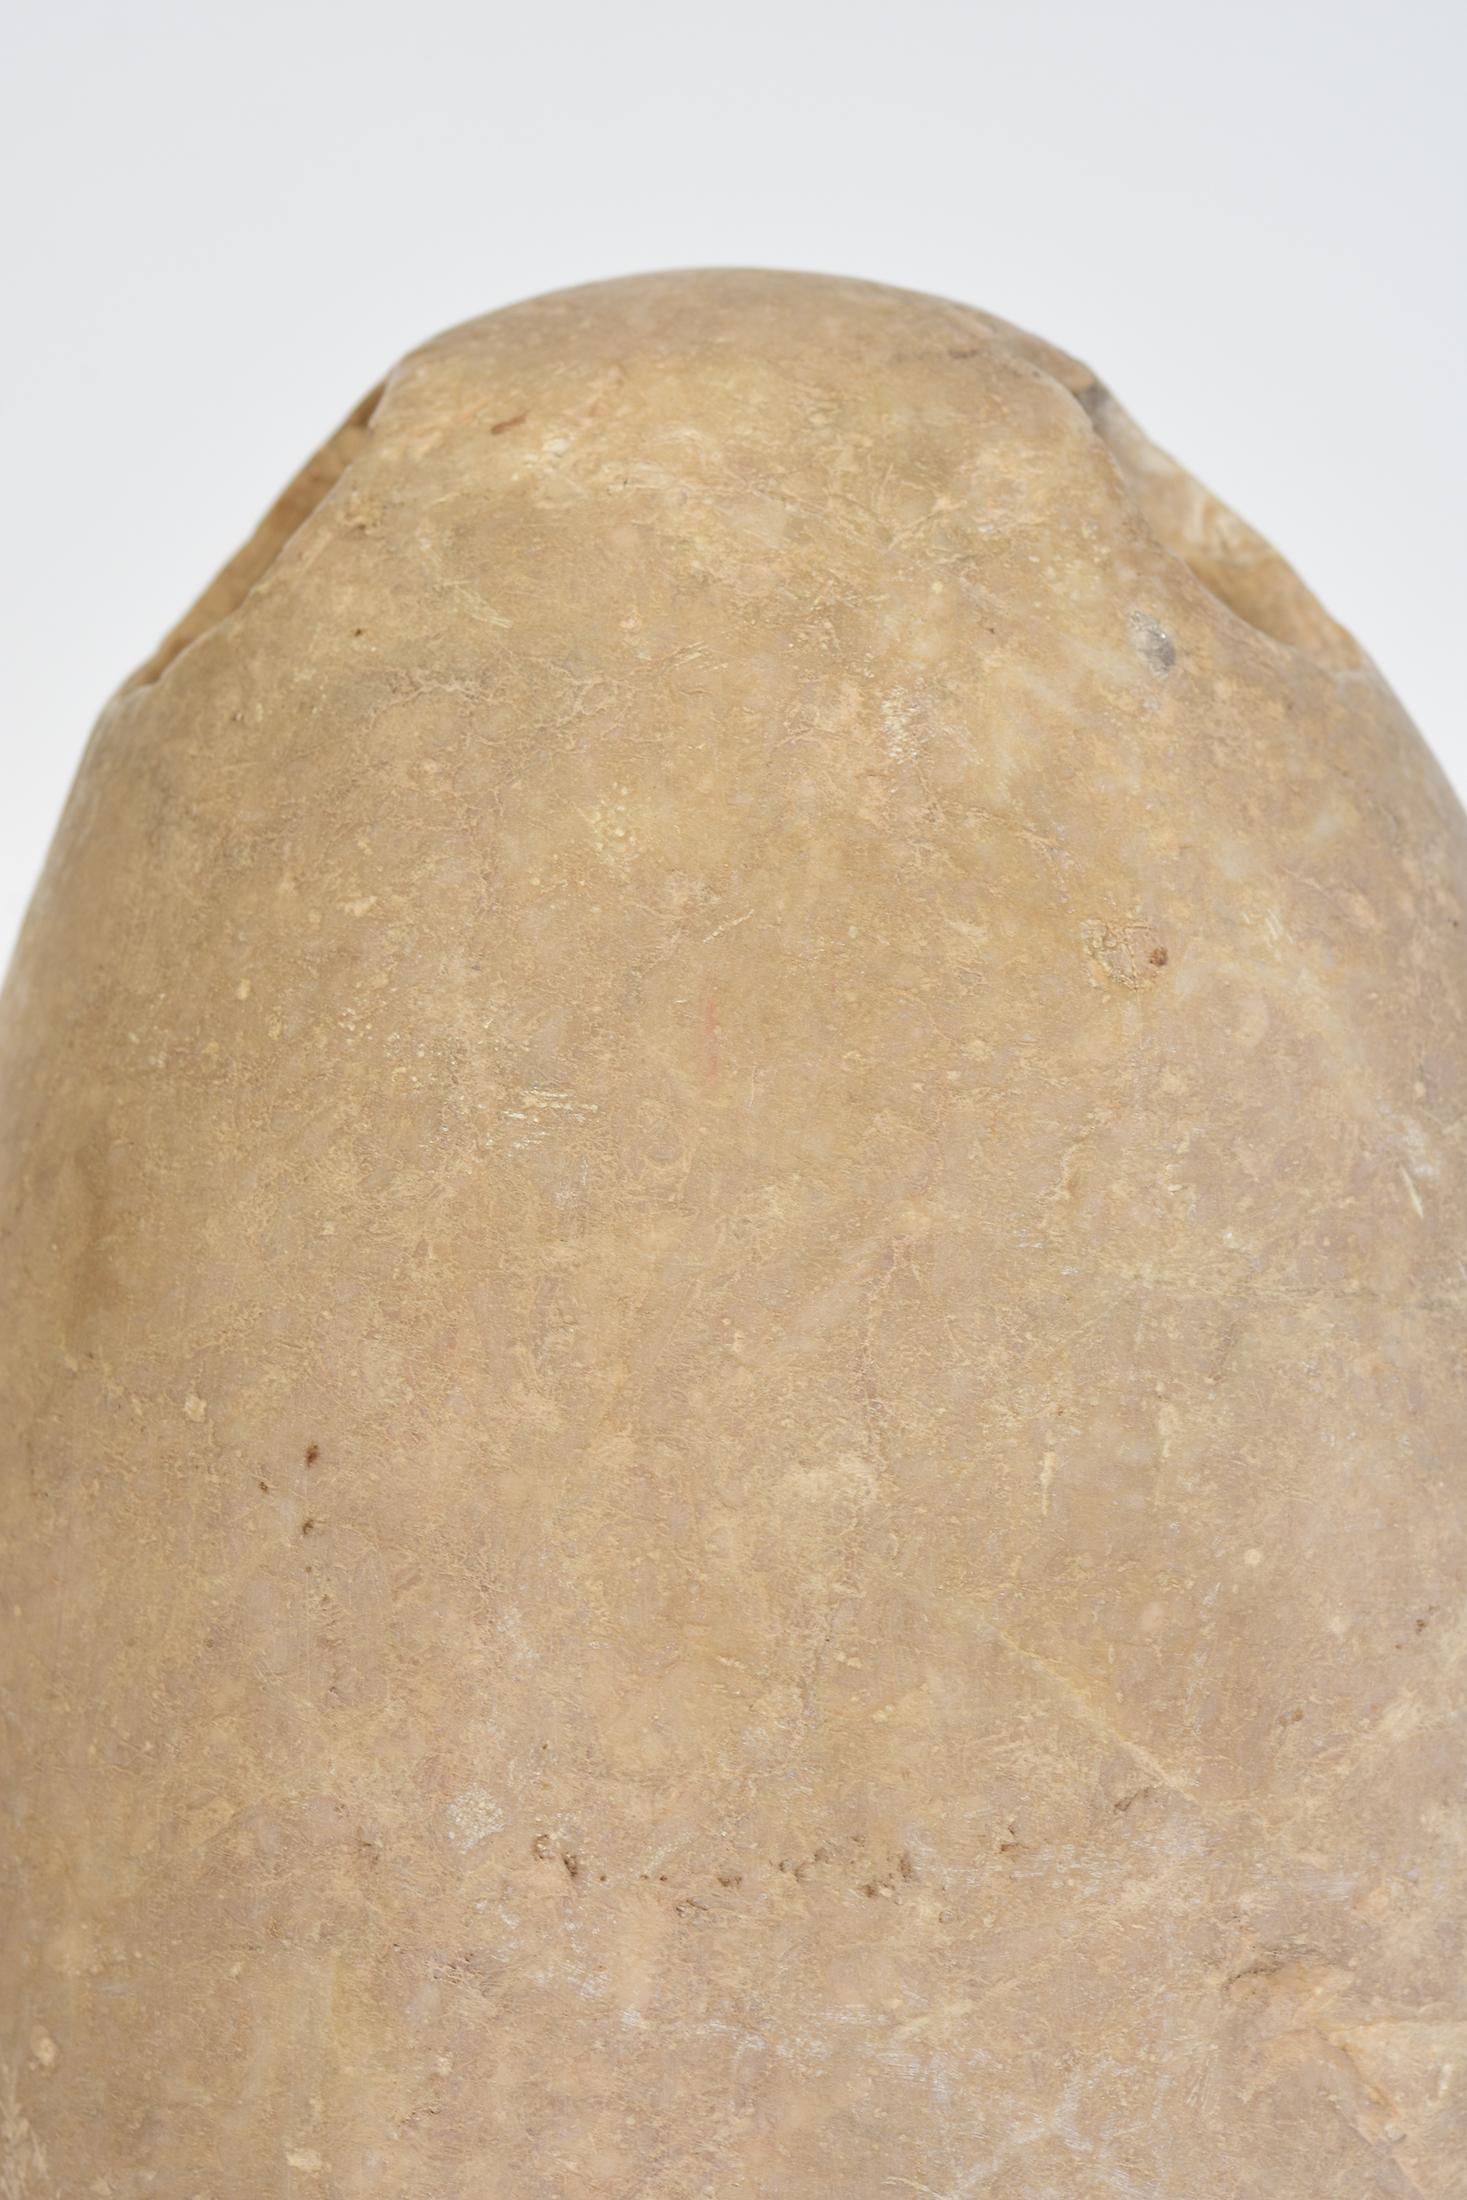 2-3 B.C., Afghanistan, Rare Bactrian Hardstone Weight 2